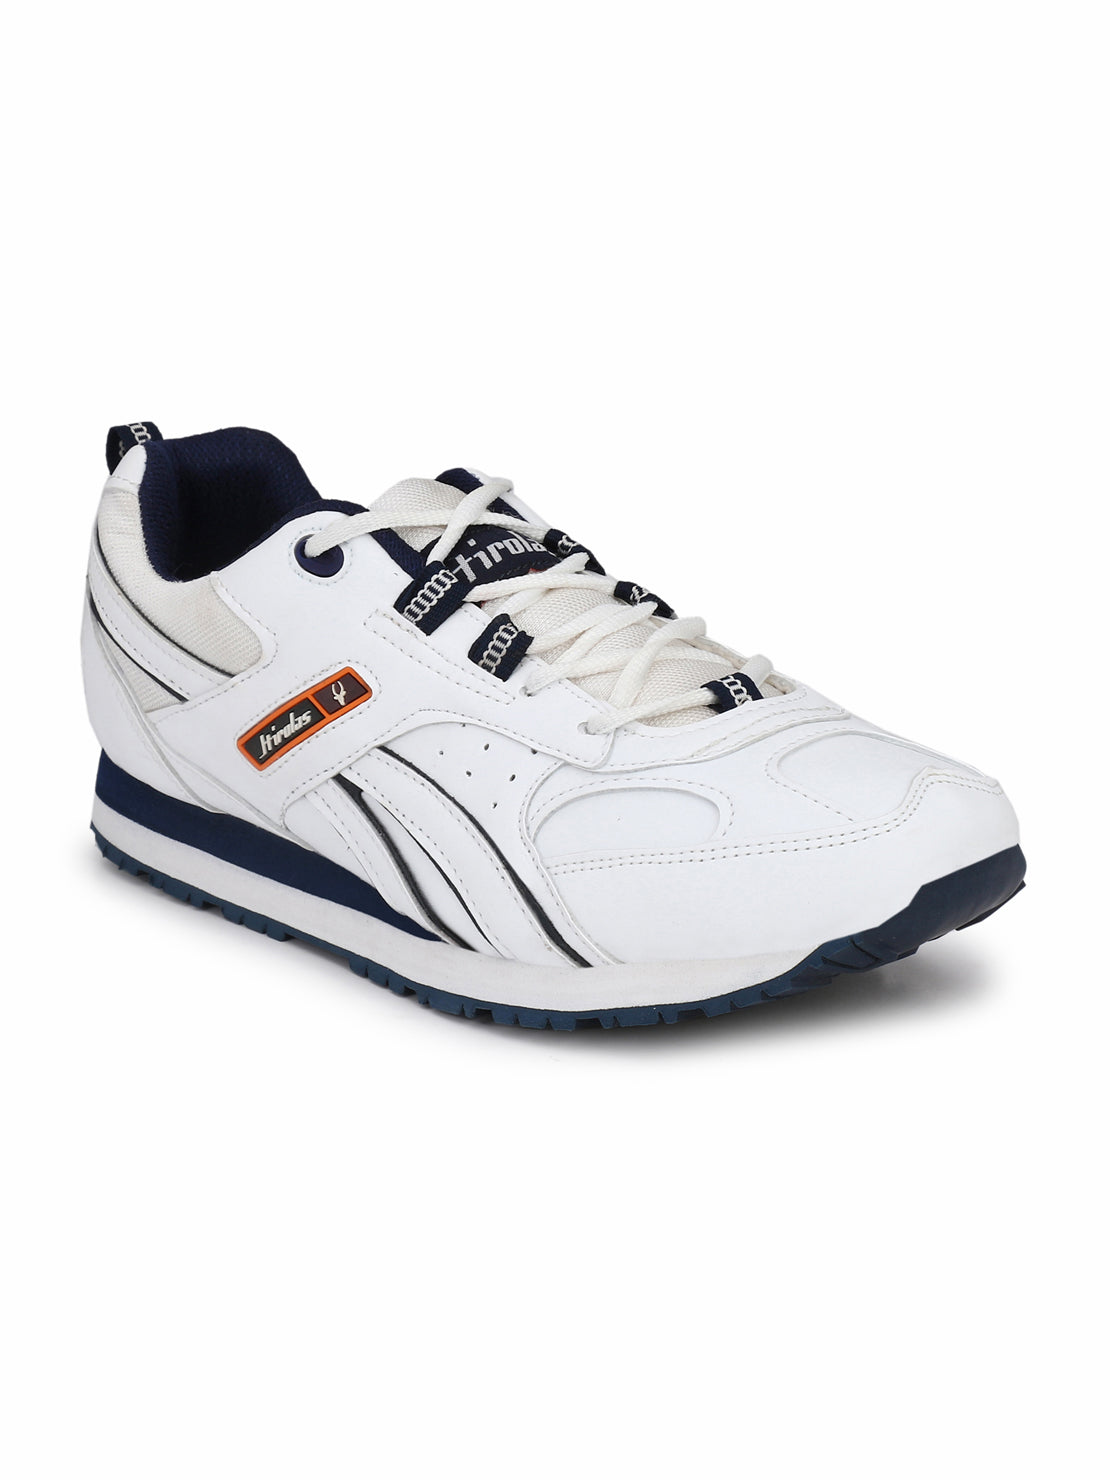 Hirolas® Men's White Multisports Lace Up Sneaker Sport Shoes (HRL1844W)